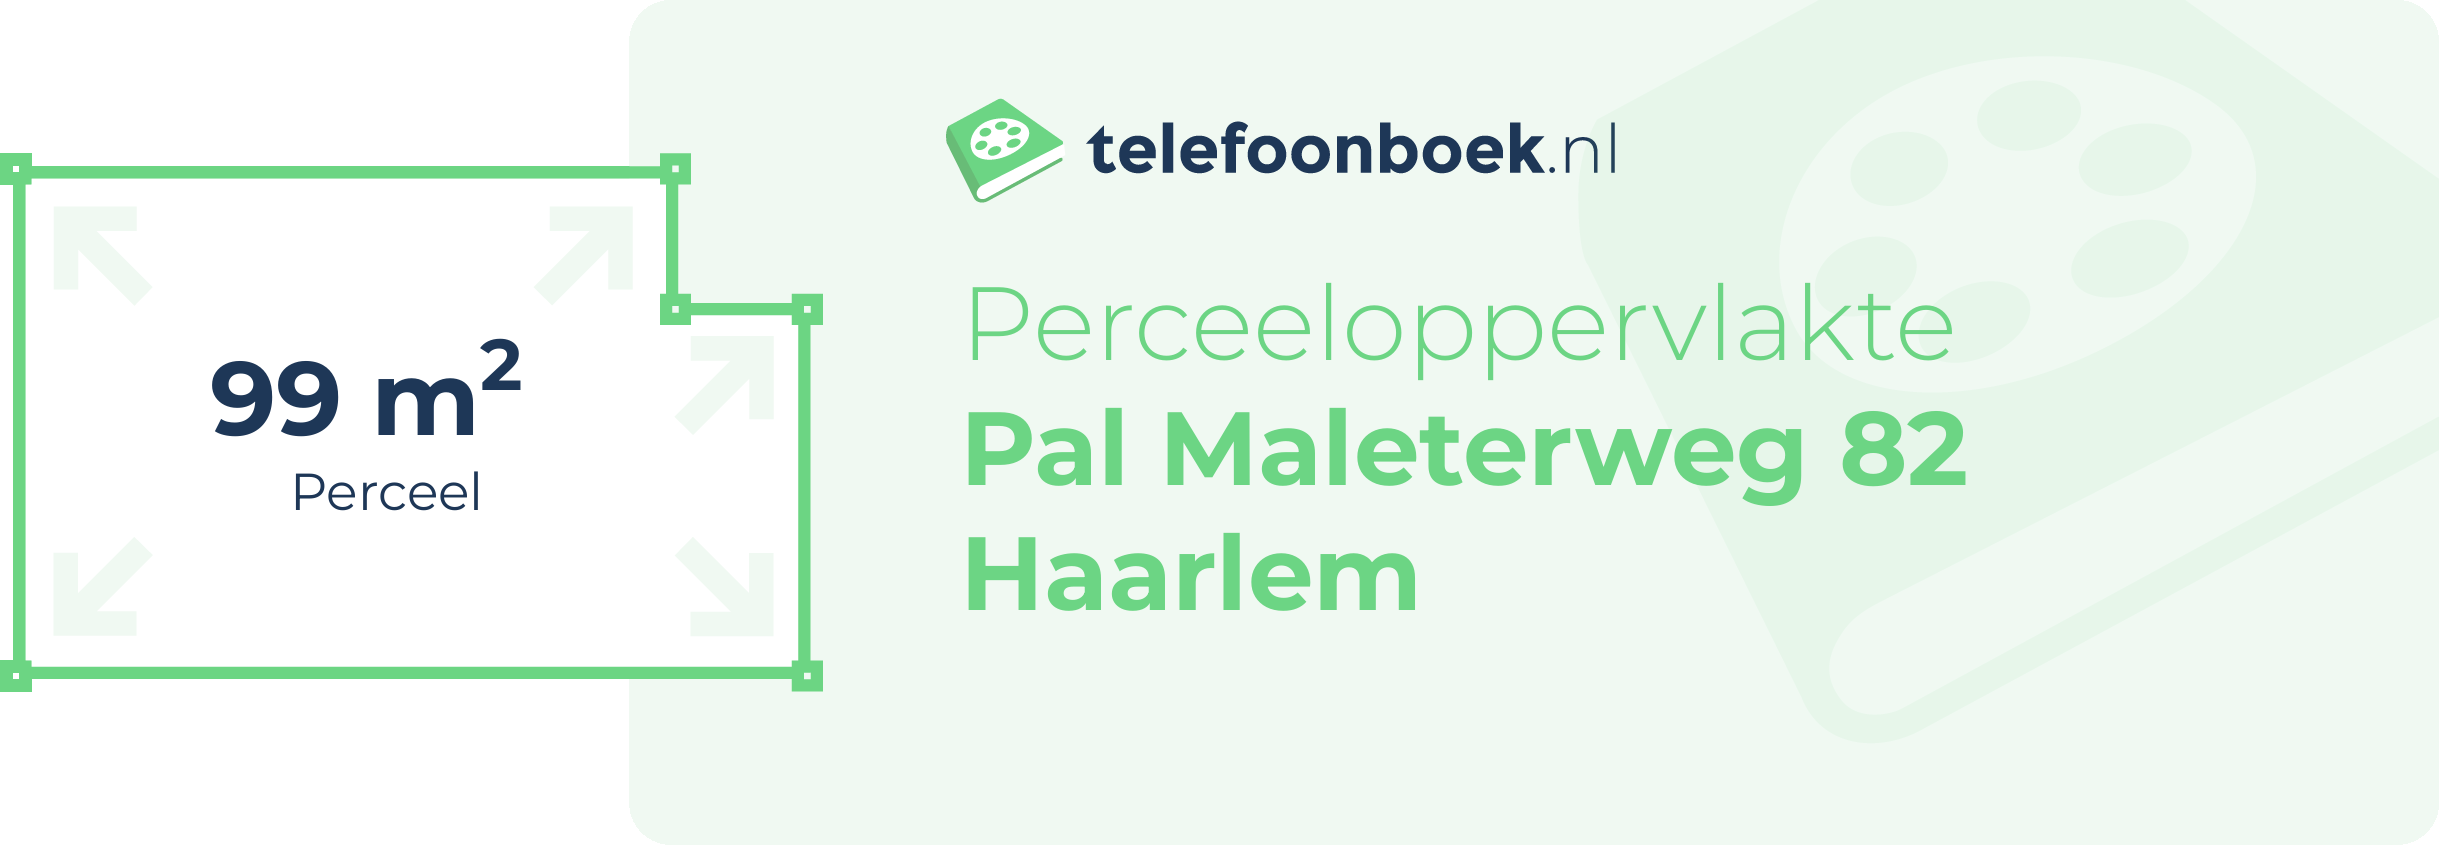 Perceeloppervlakte Pal Maleterweg 82 Haarlem